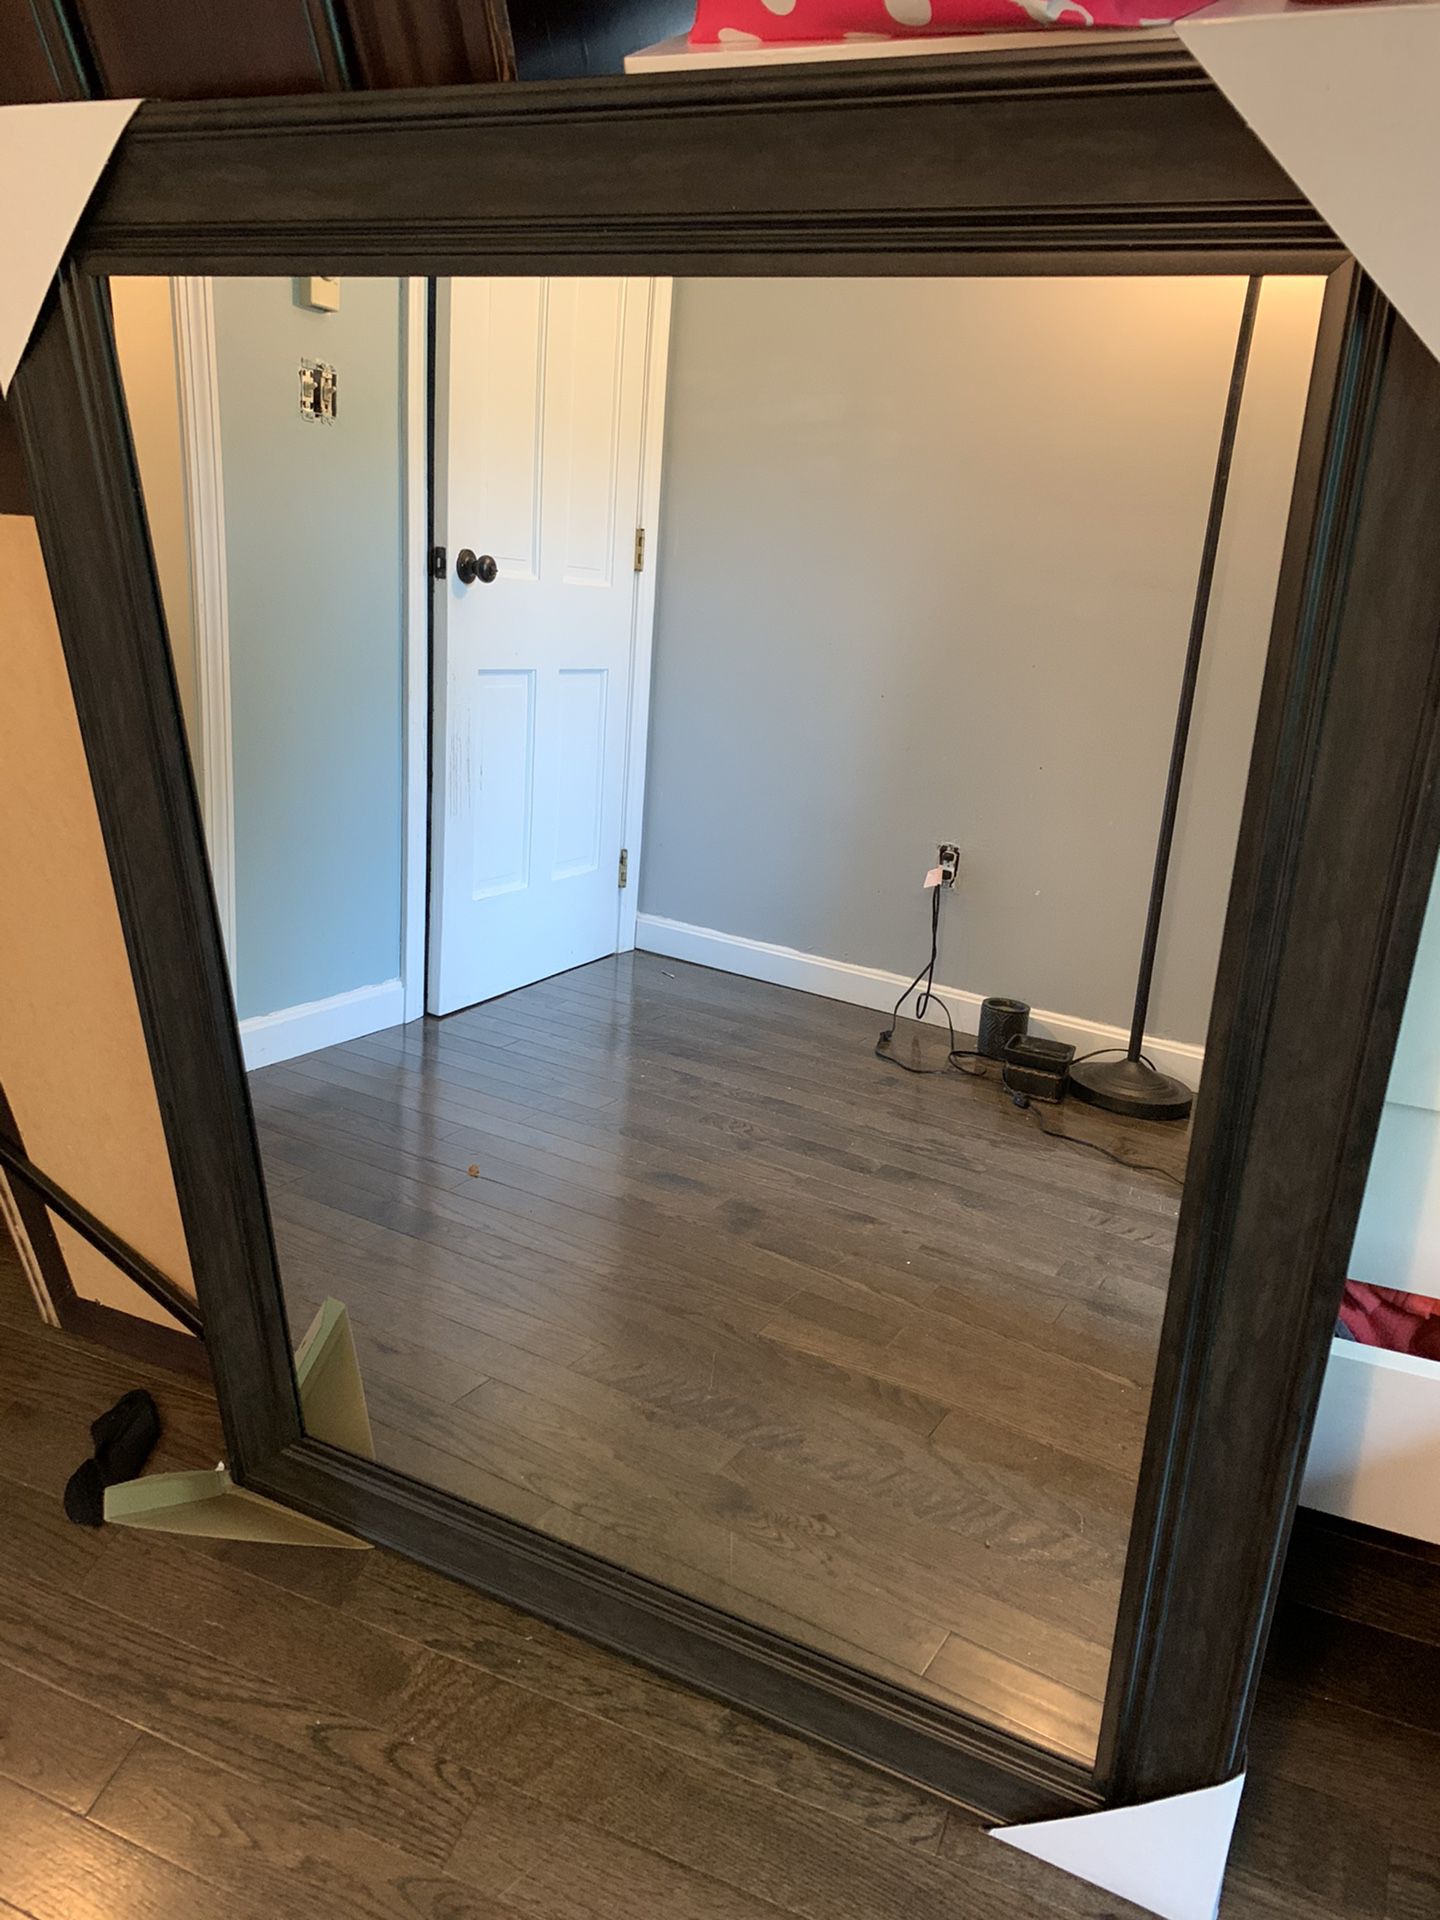 Brand new wall mirror